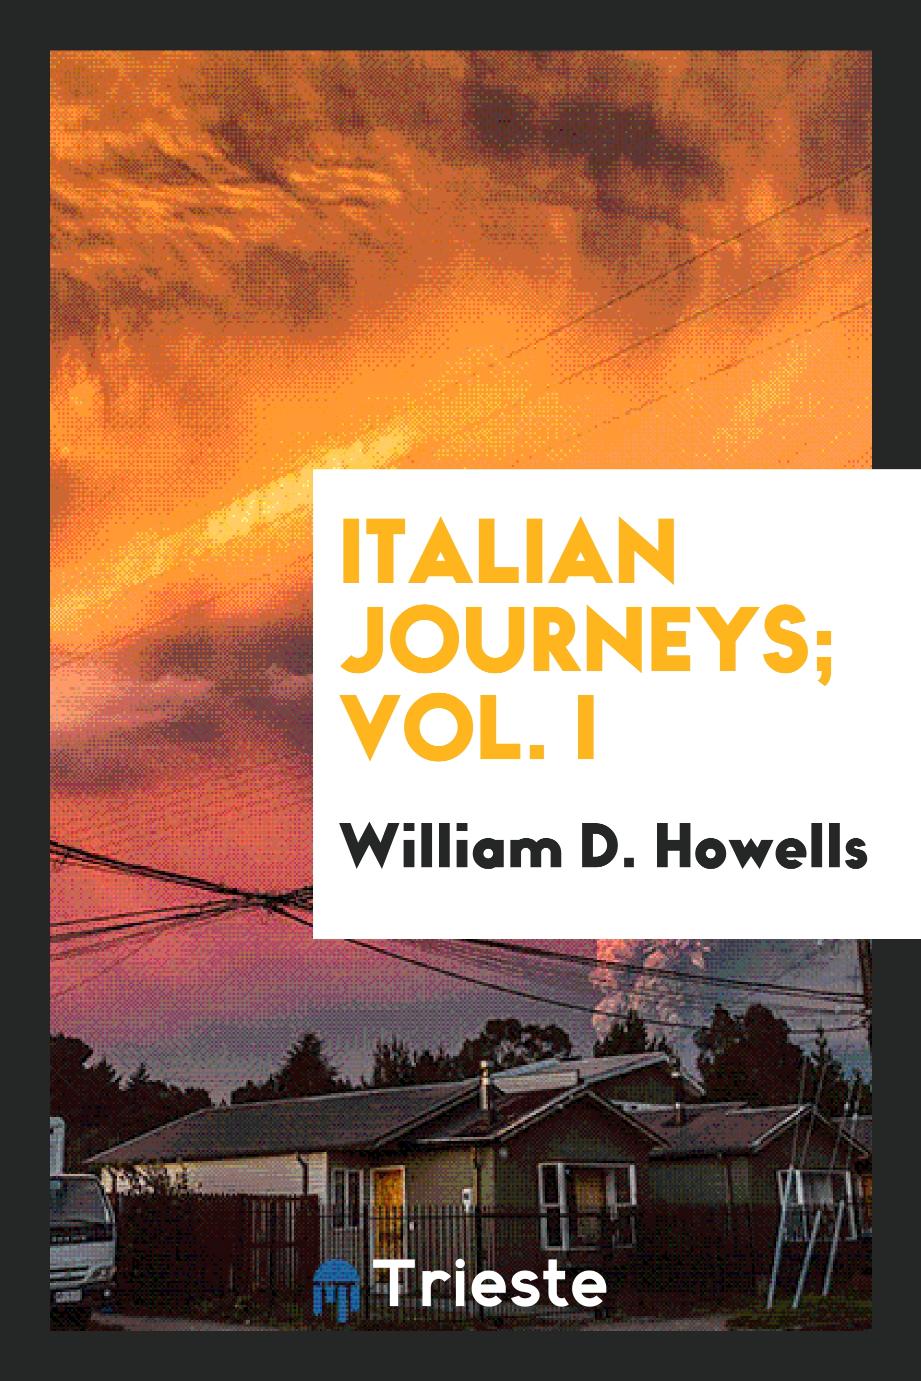 Italian journeys; Vol. I